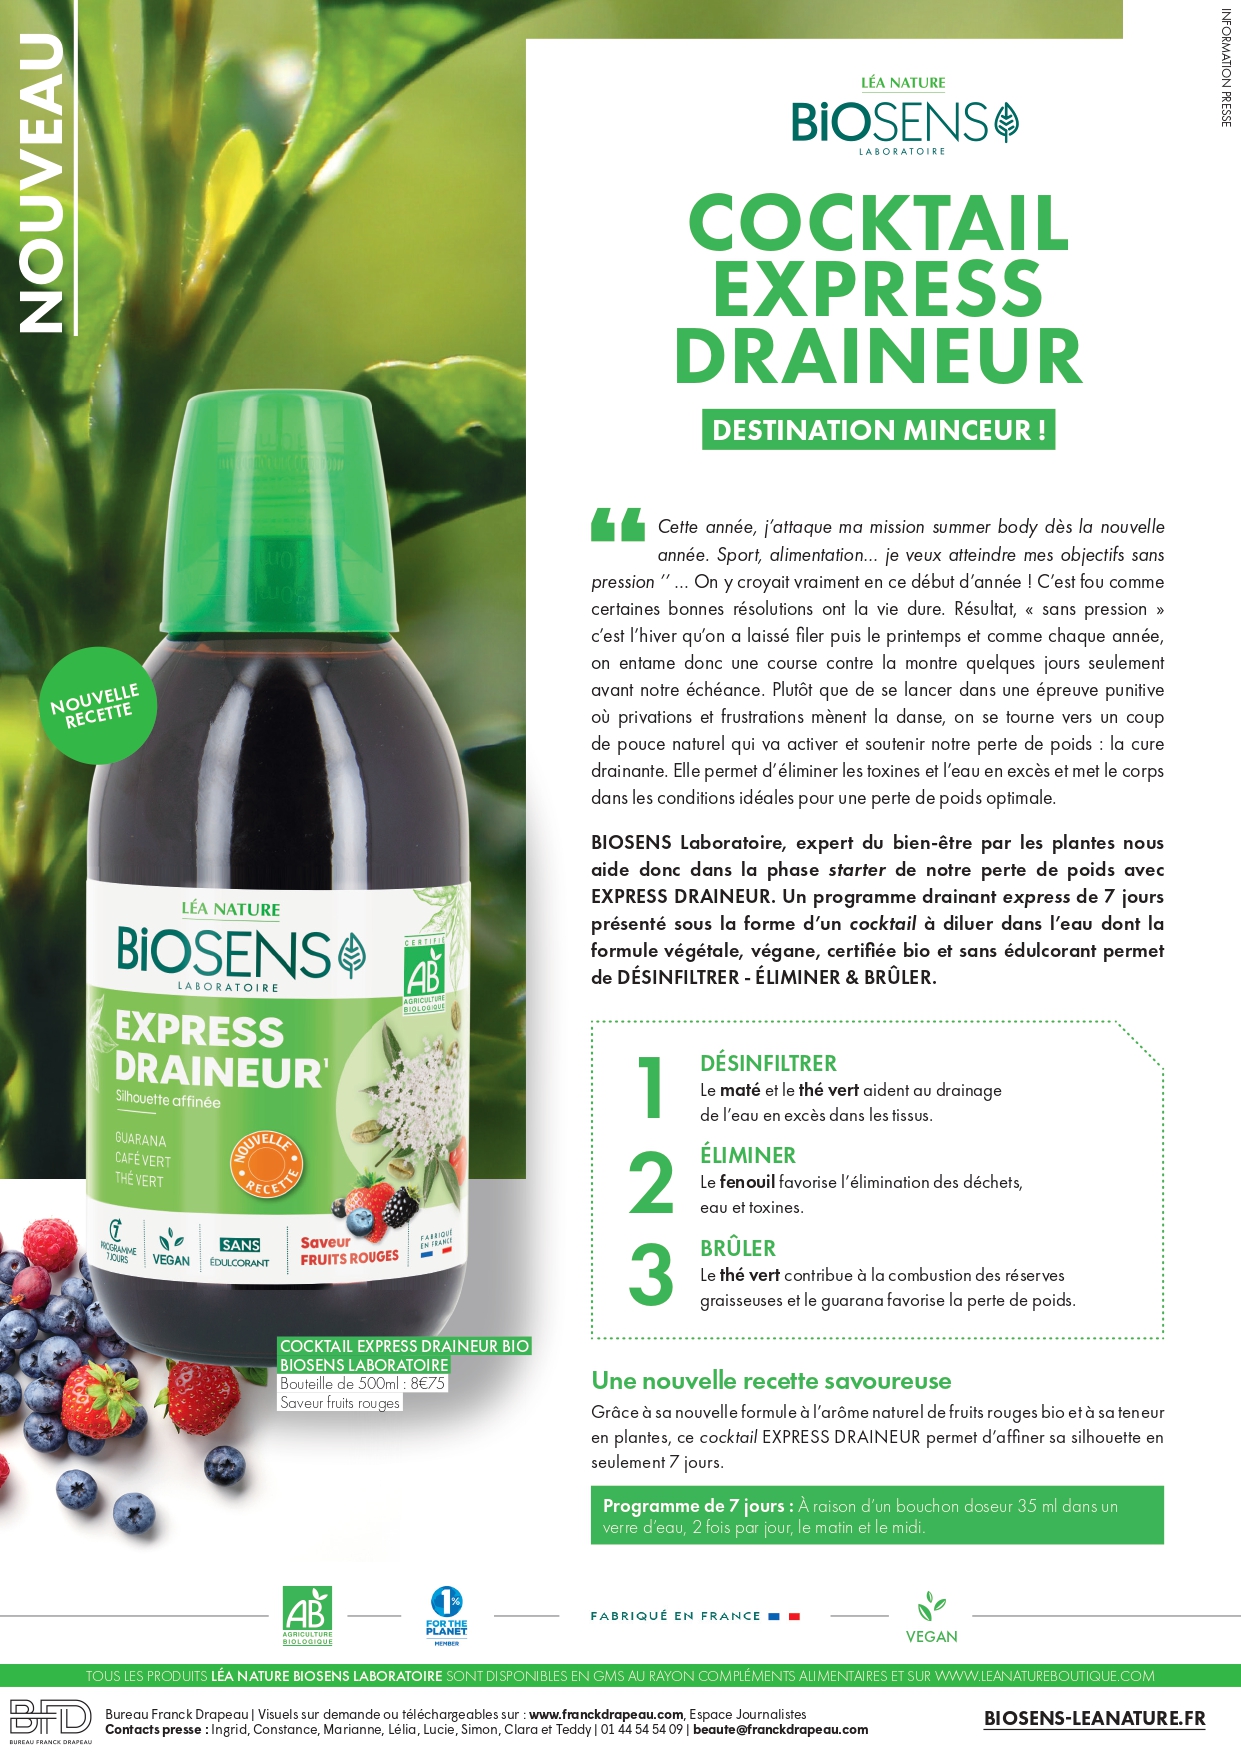 Biosens Laboratoire | Express Draineur